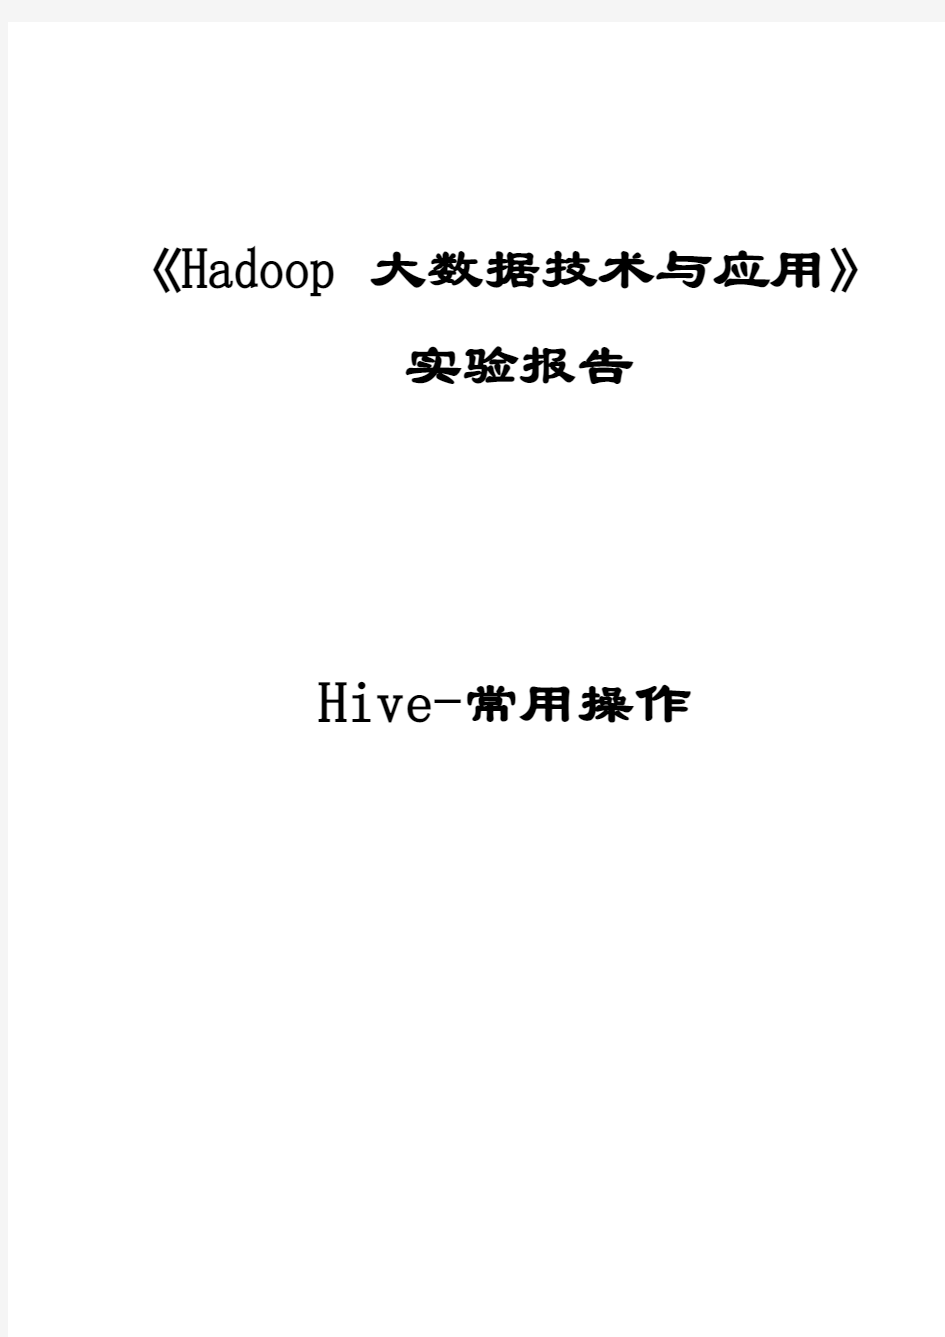 《Hadoop大数据技术与应用》-Hive-常用操作